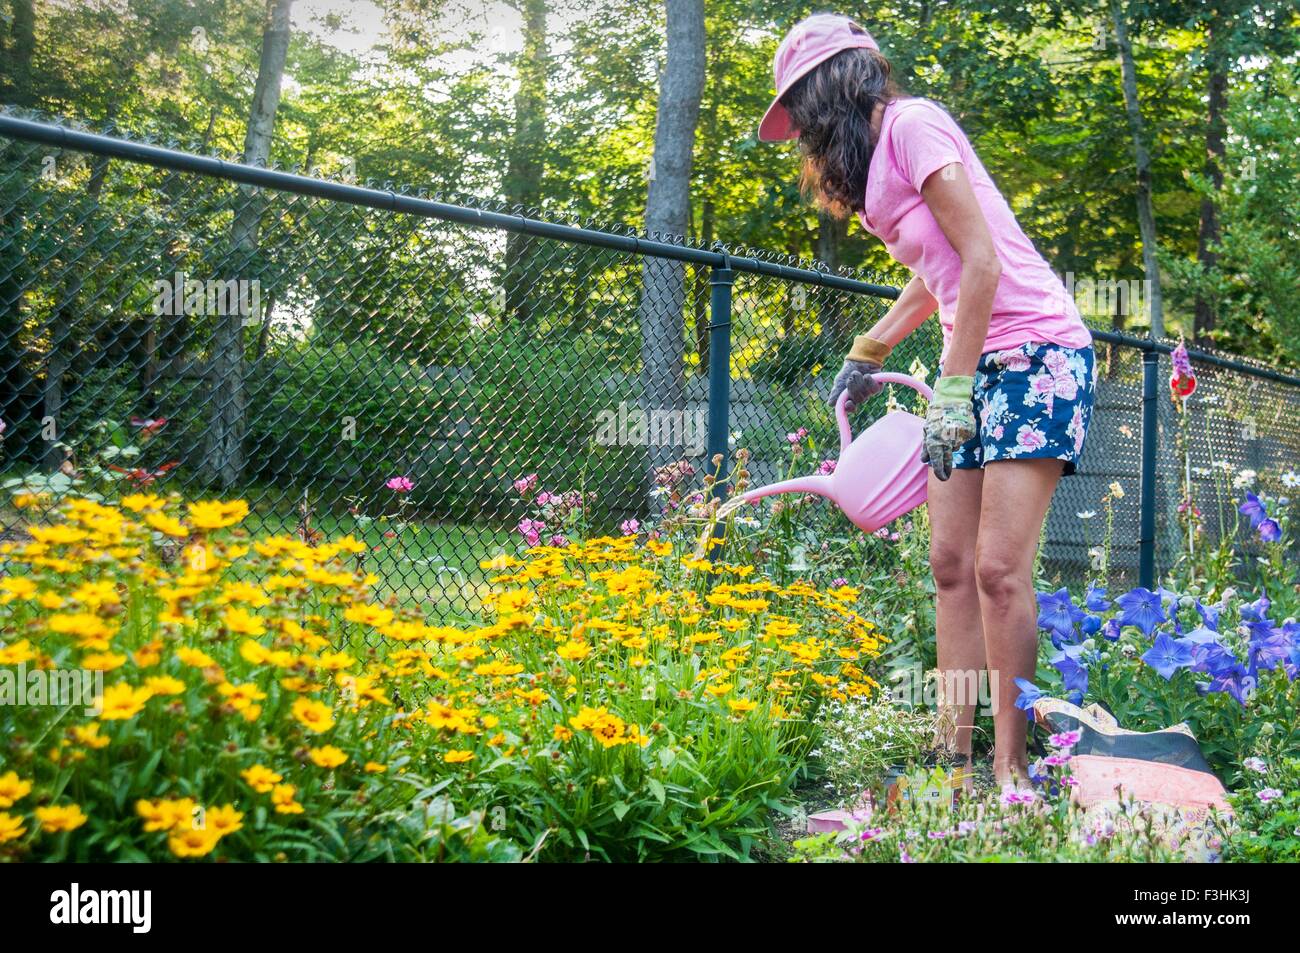 Woman watering flowers in garden Stock Photo